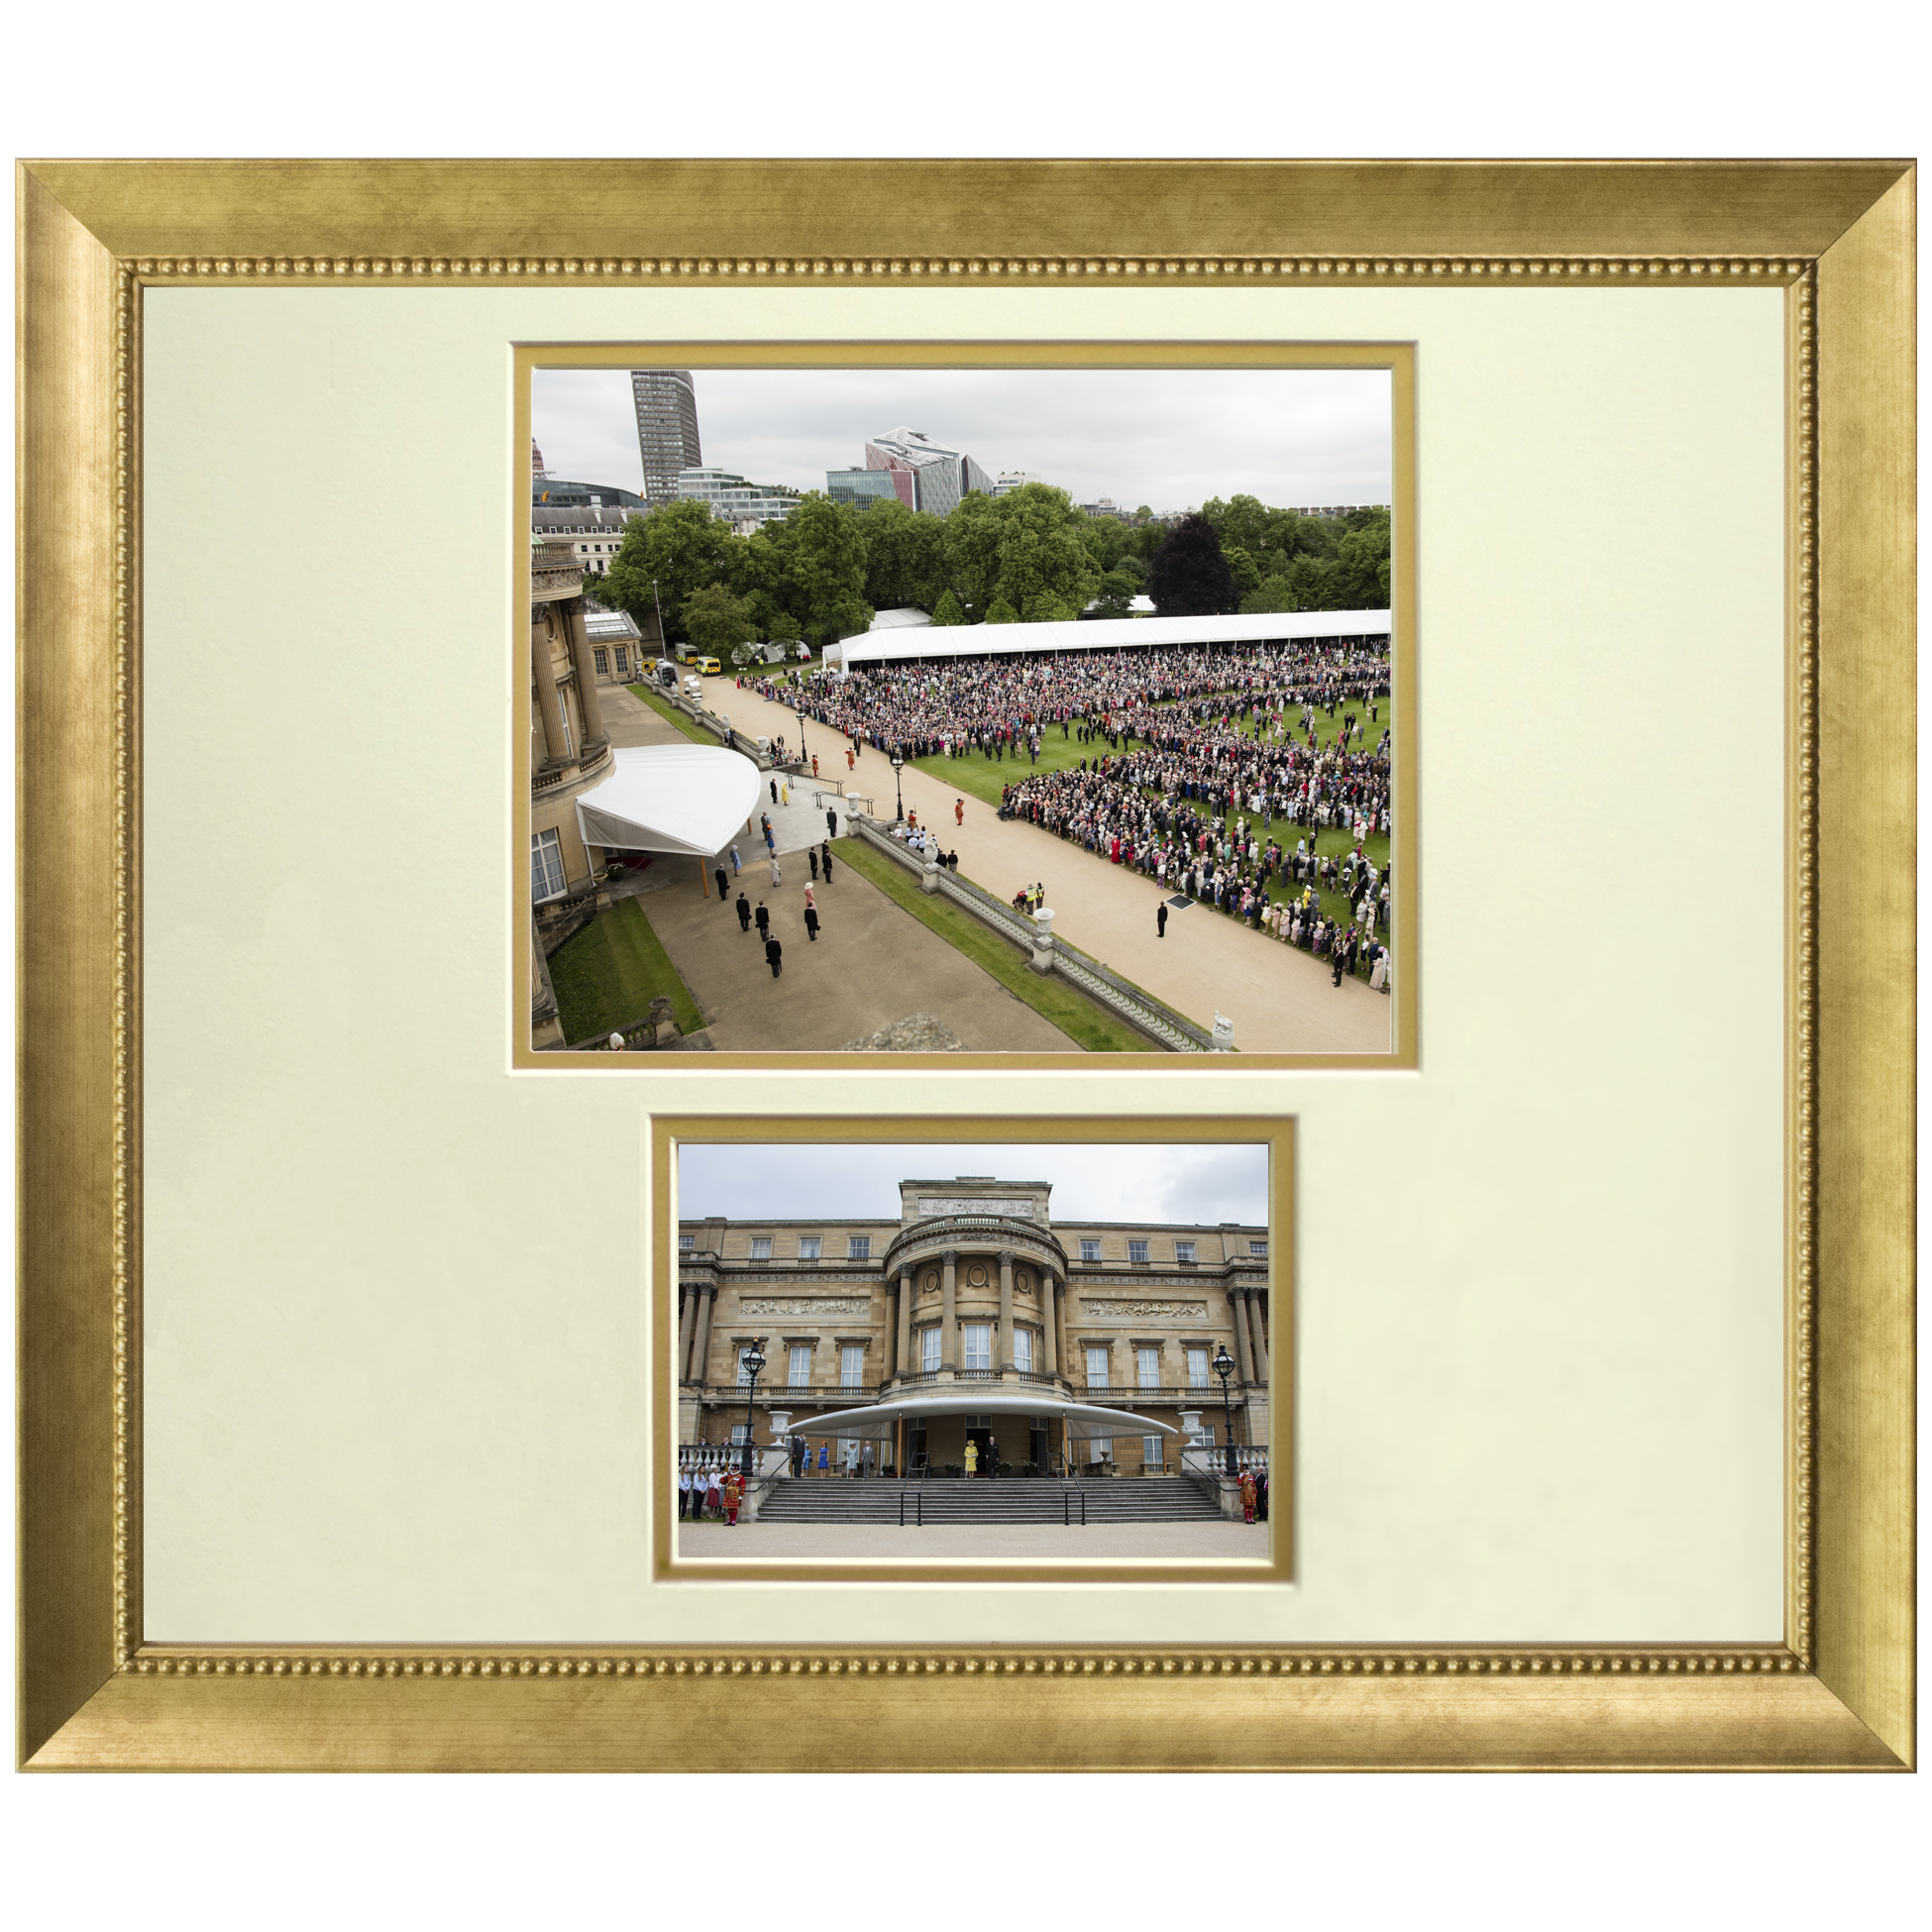 Commemorative 2017 Royal Garden Party Framed Photograph